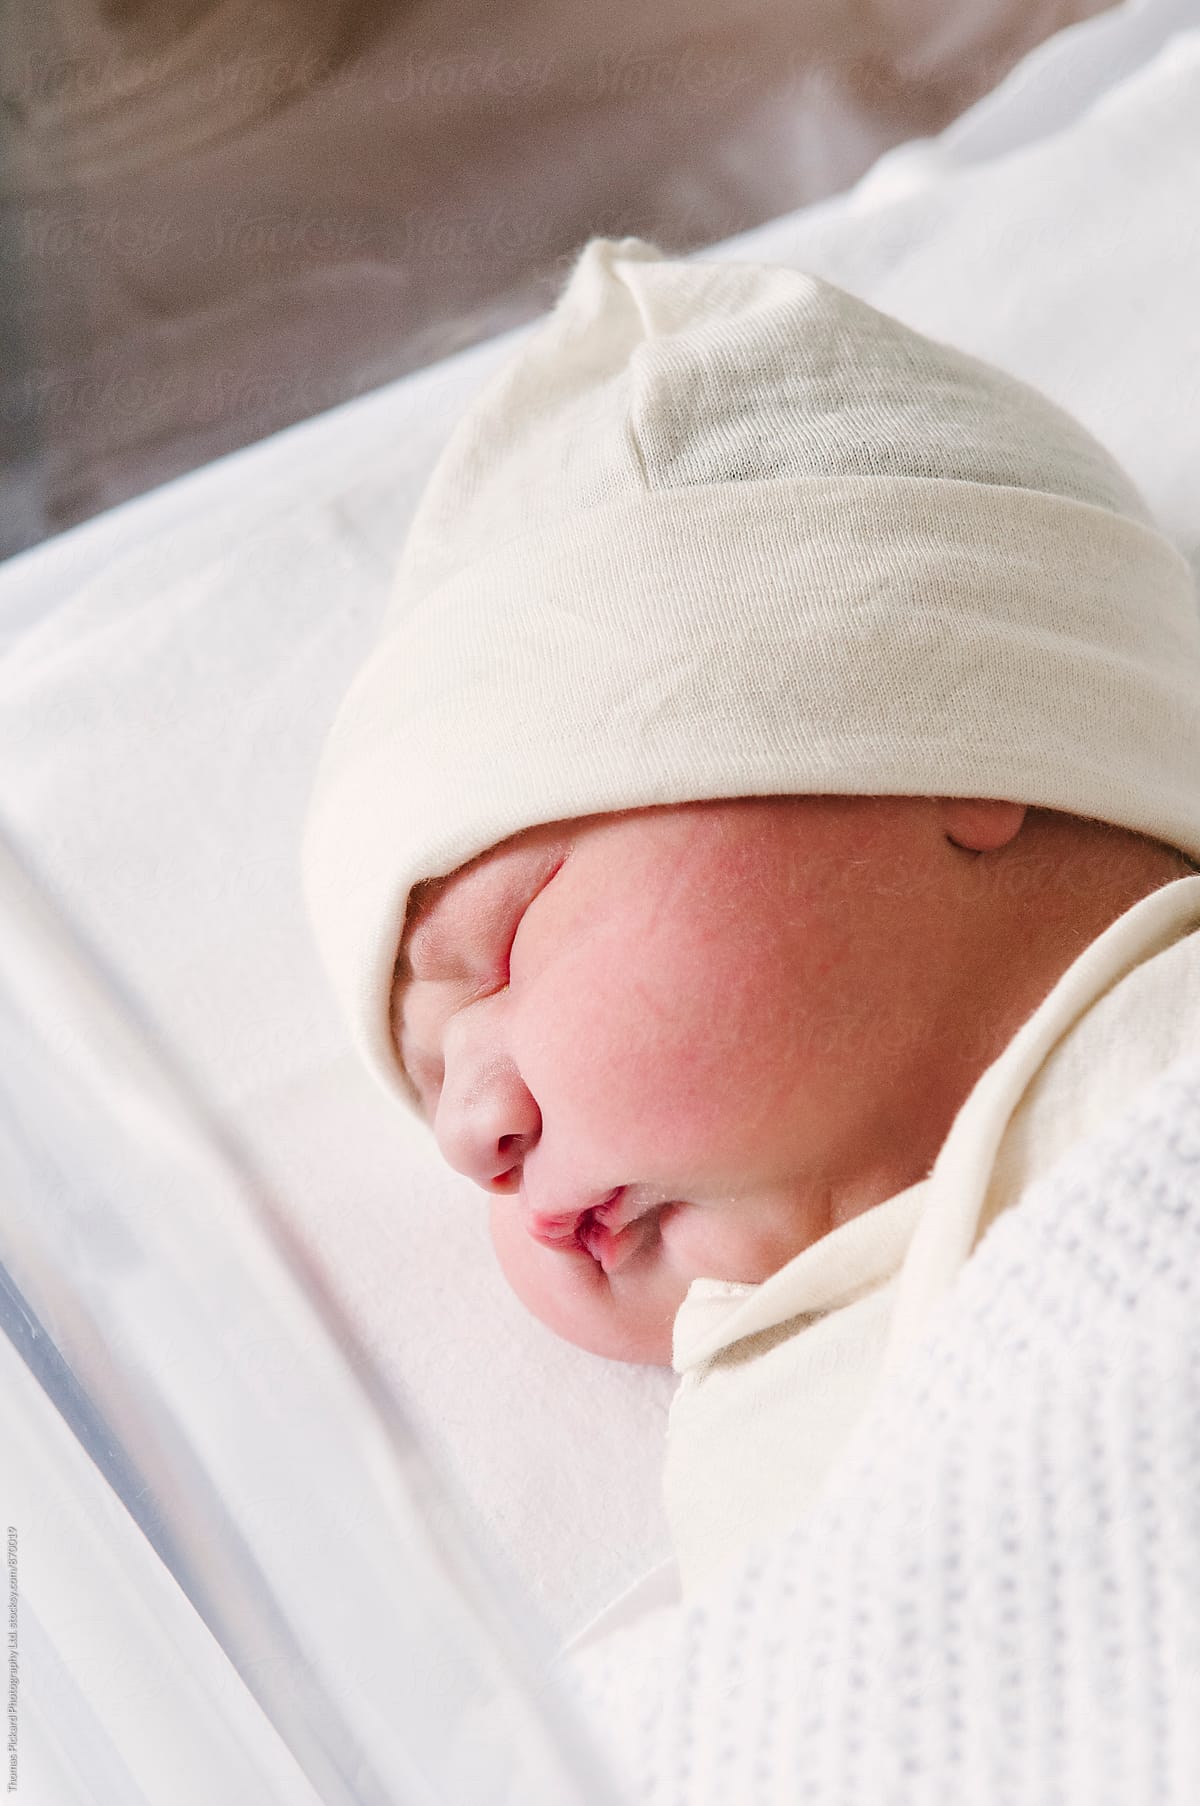 One day old newborn sleeping at hospital, New Zealand.